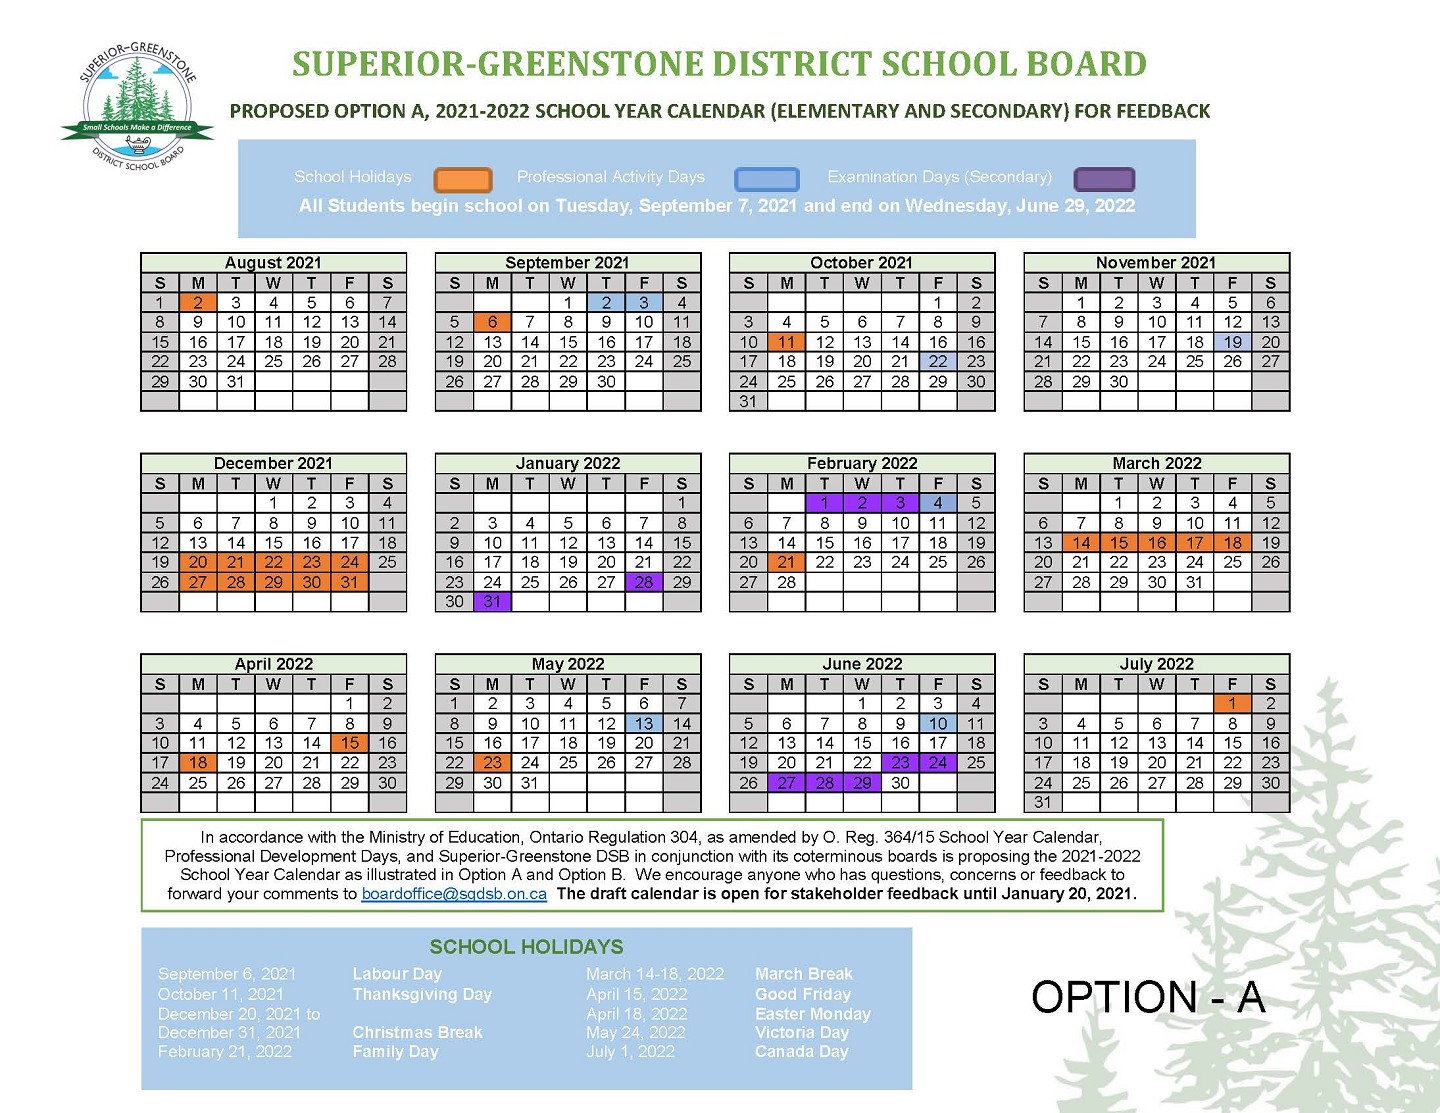 option-a-proposed-school-year-calendar-2